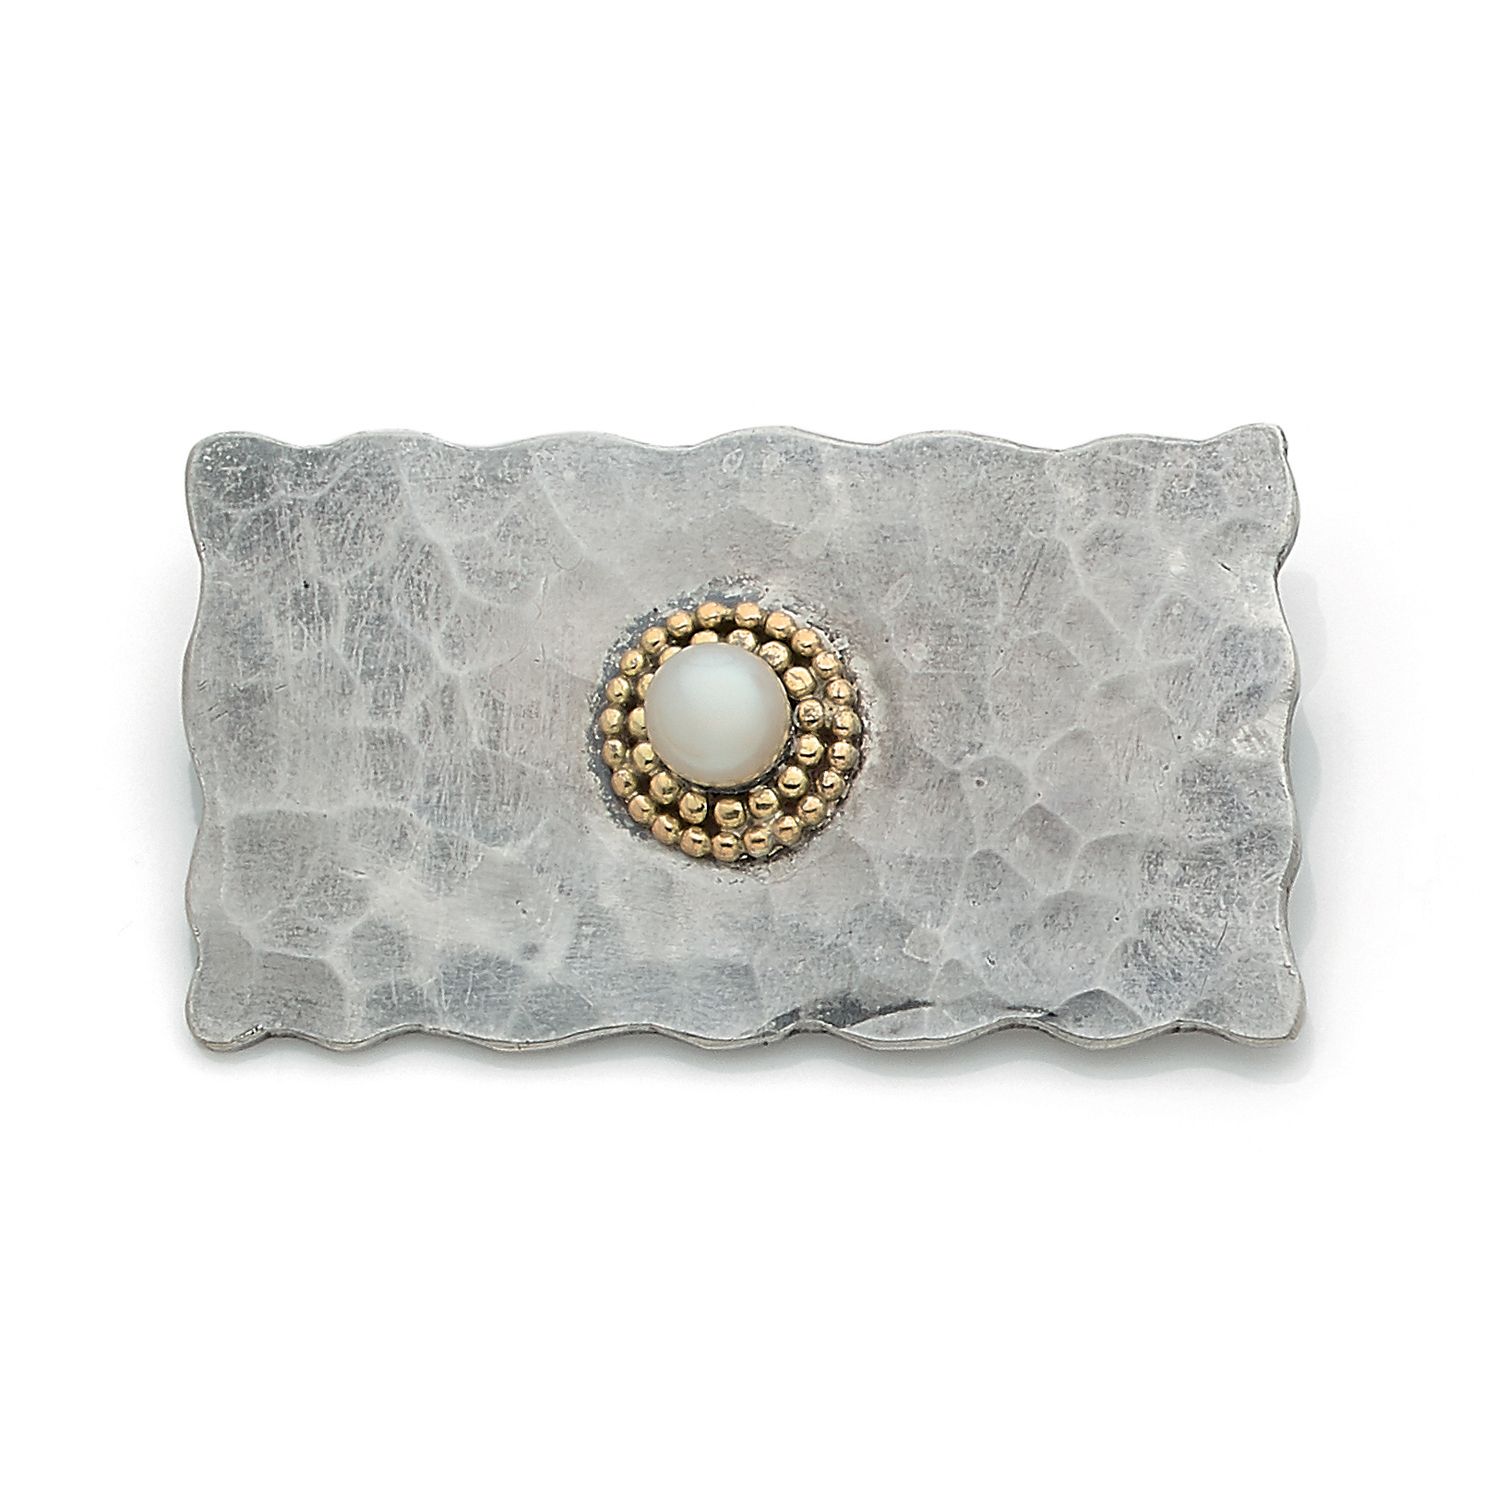 Null 让-德斯普雷斯 (1889-1980)

长方形的锤制银（925‰）胸针，中间是一颗白色养殖珍珠，周围是双层镀金的珍珠。

有签名，有金匠大师的印记。&hellip;